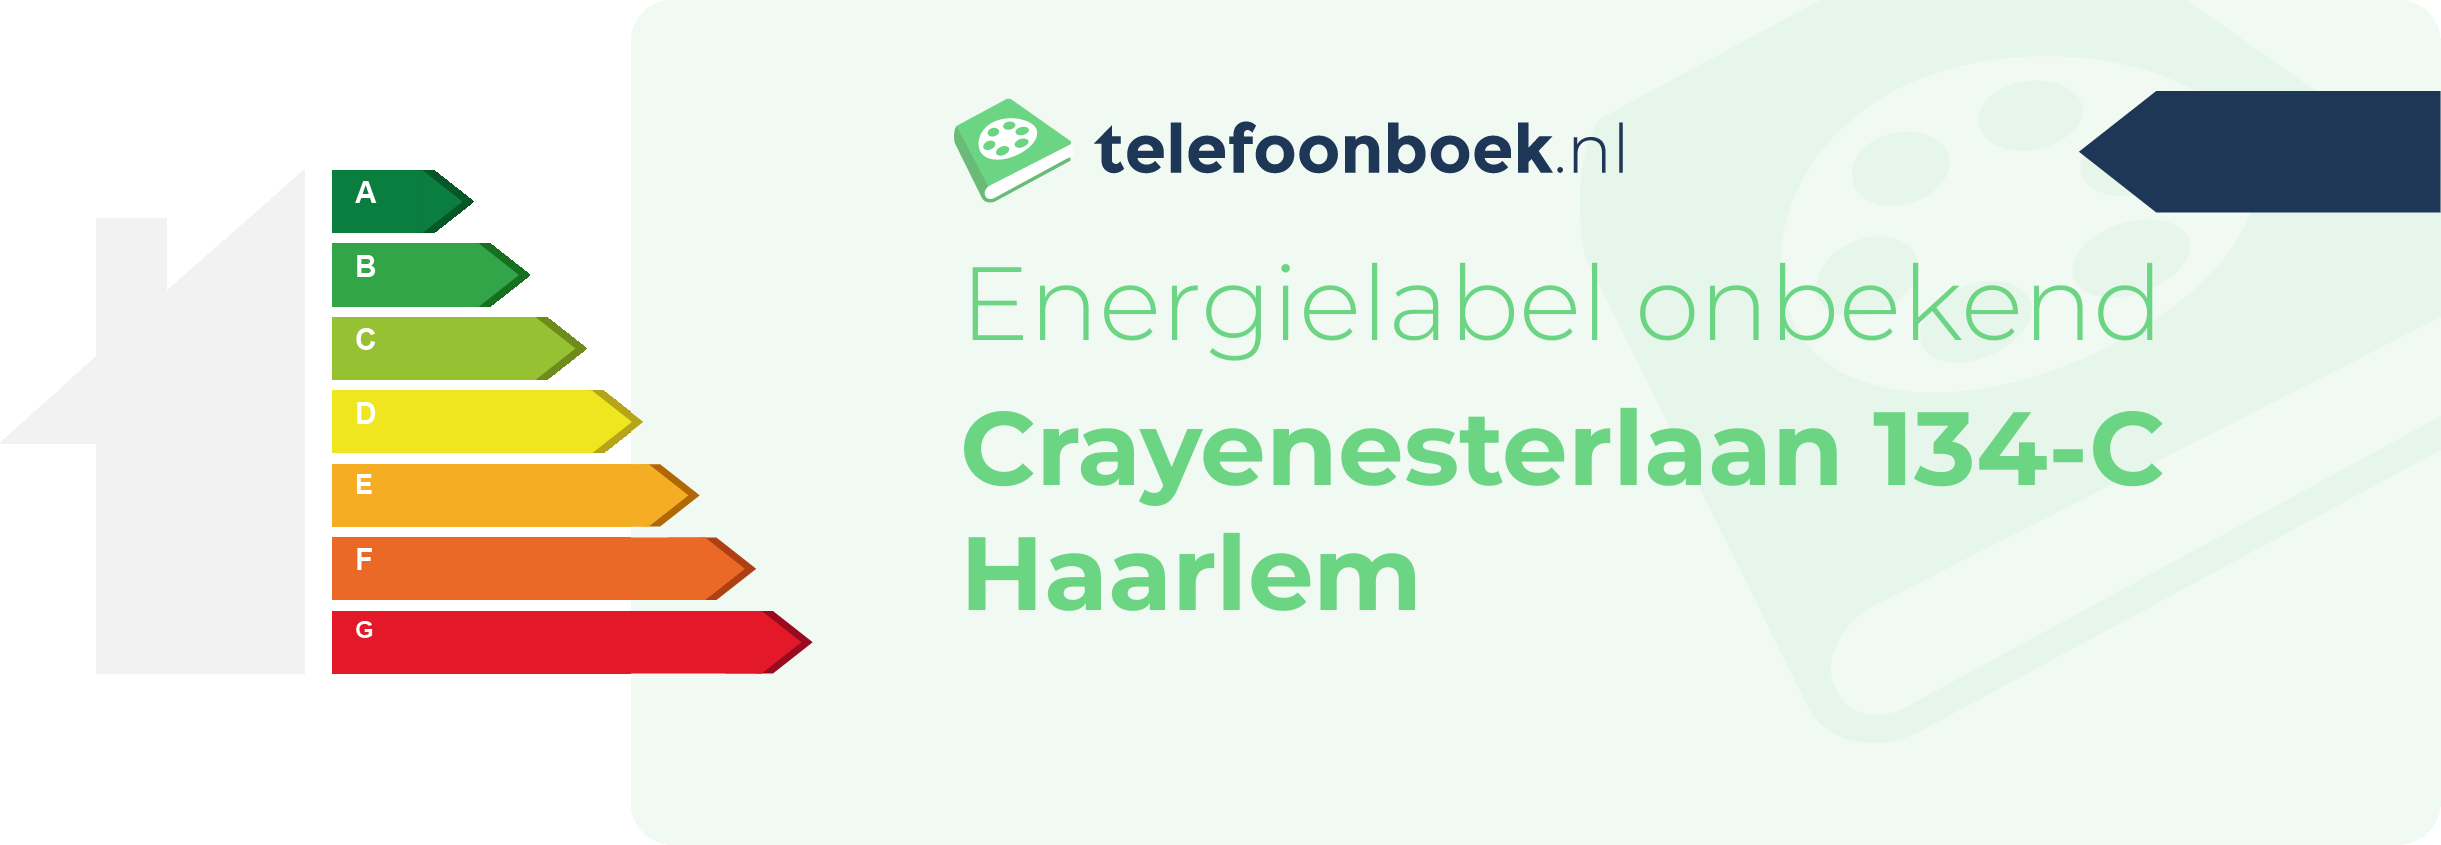 Energielabel Crayenesterlaan 134-C Haarlem